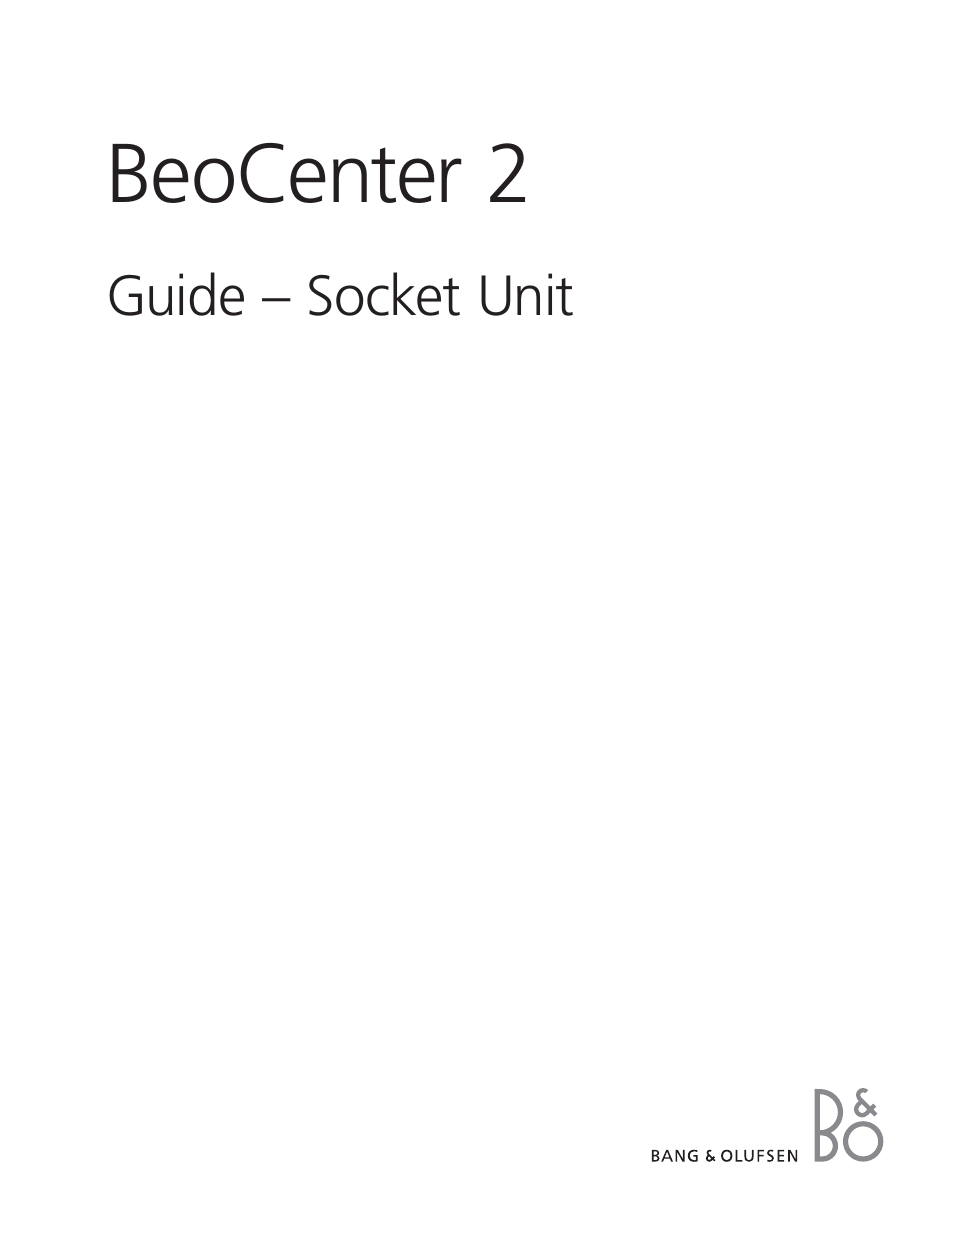 BeoCenter 2 Socket Unit - User Guide